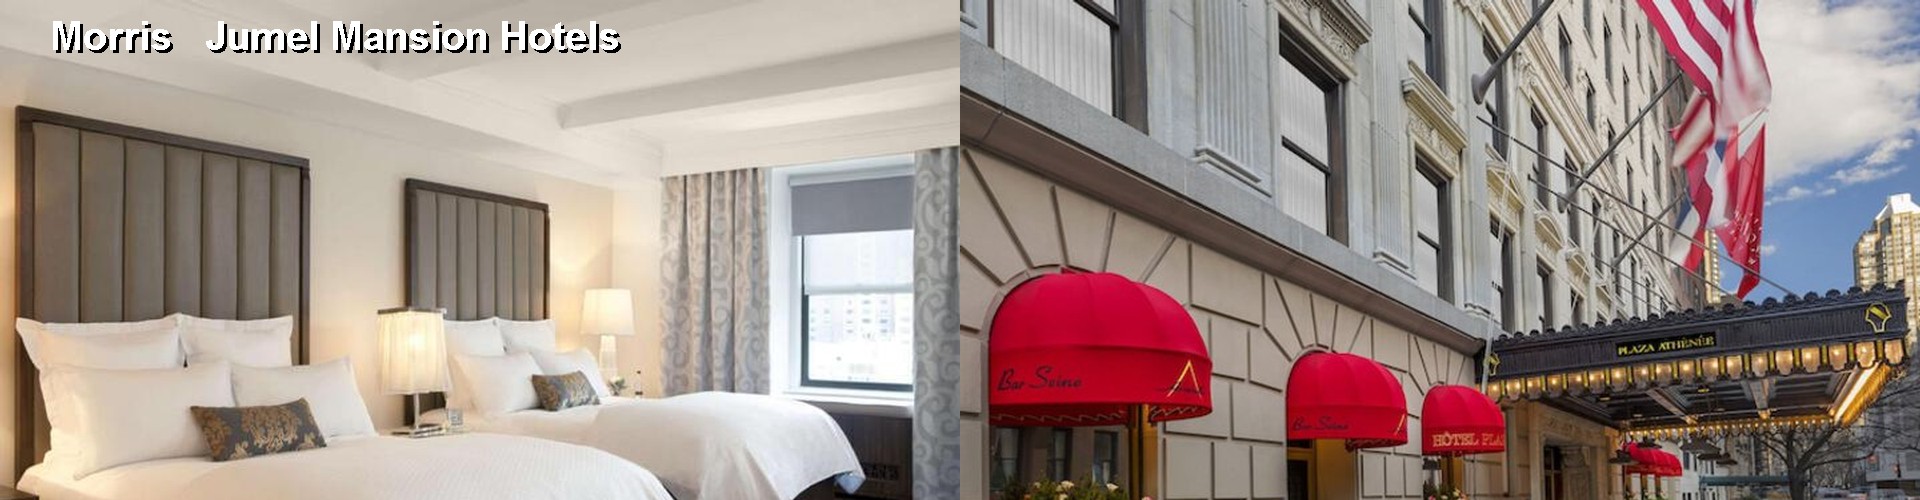 1 Best Hotels near Morris   Jumel Mansion